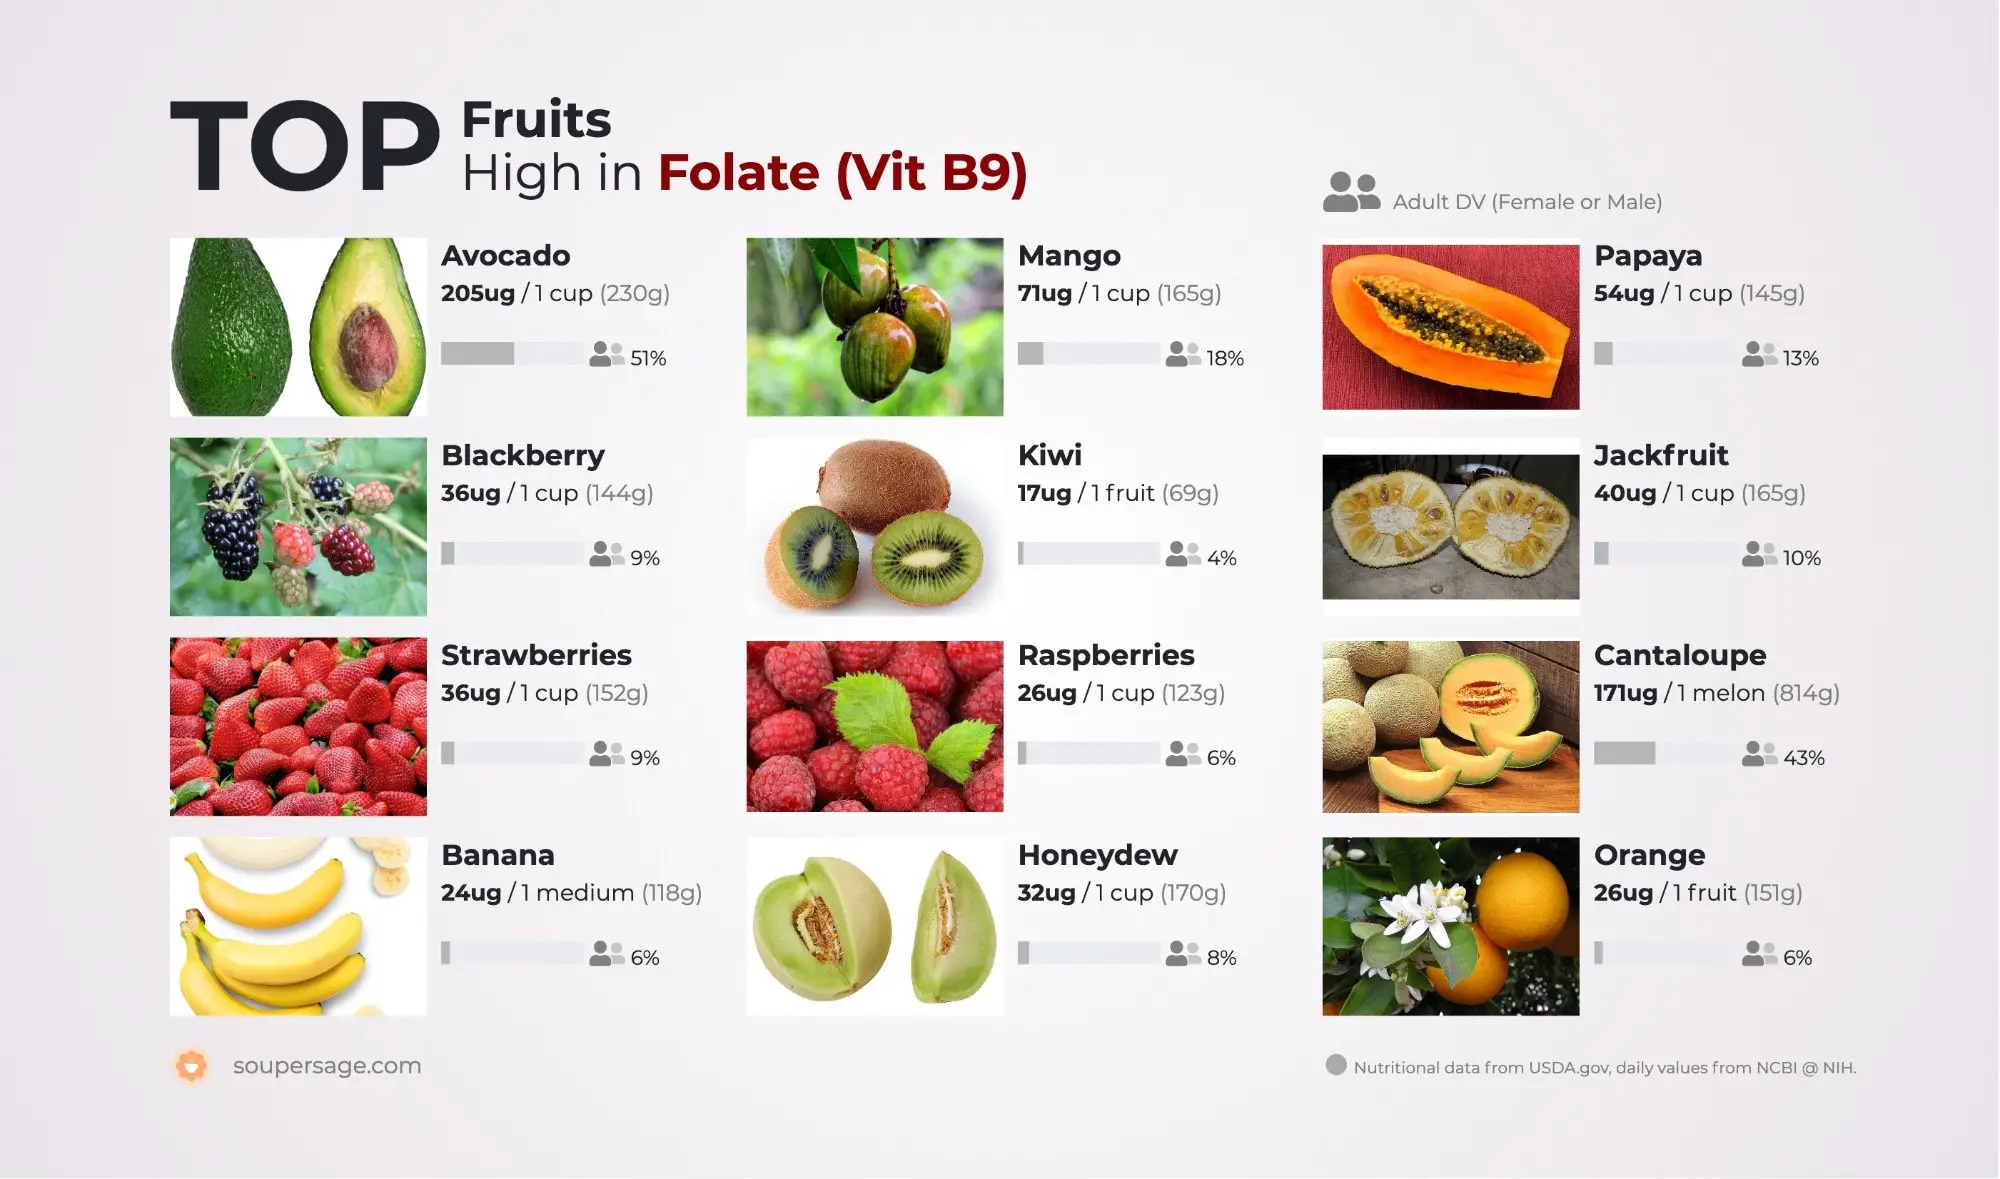 Top Fruits High in Folate (Vit B9)